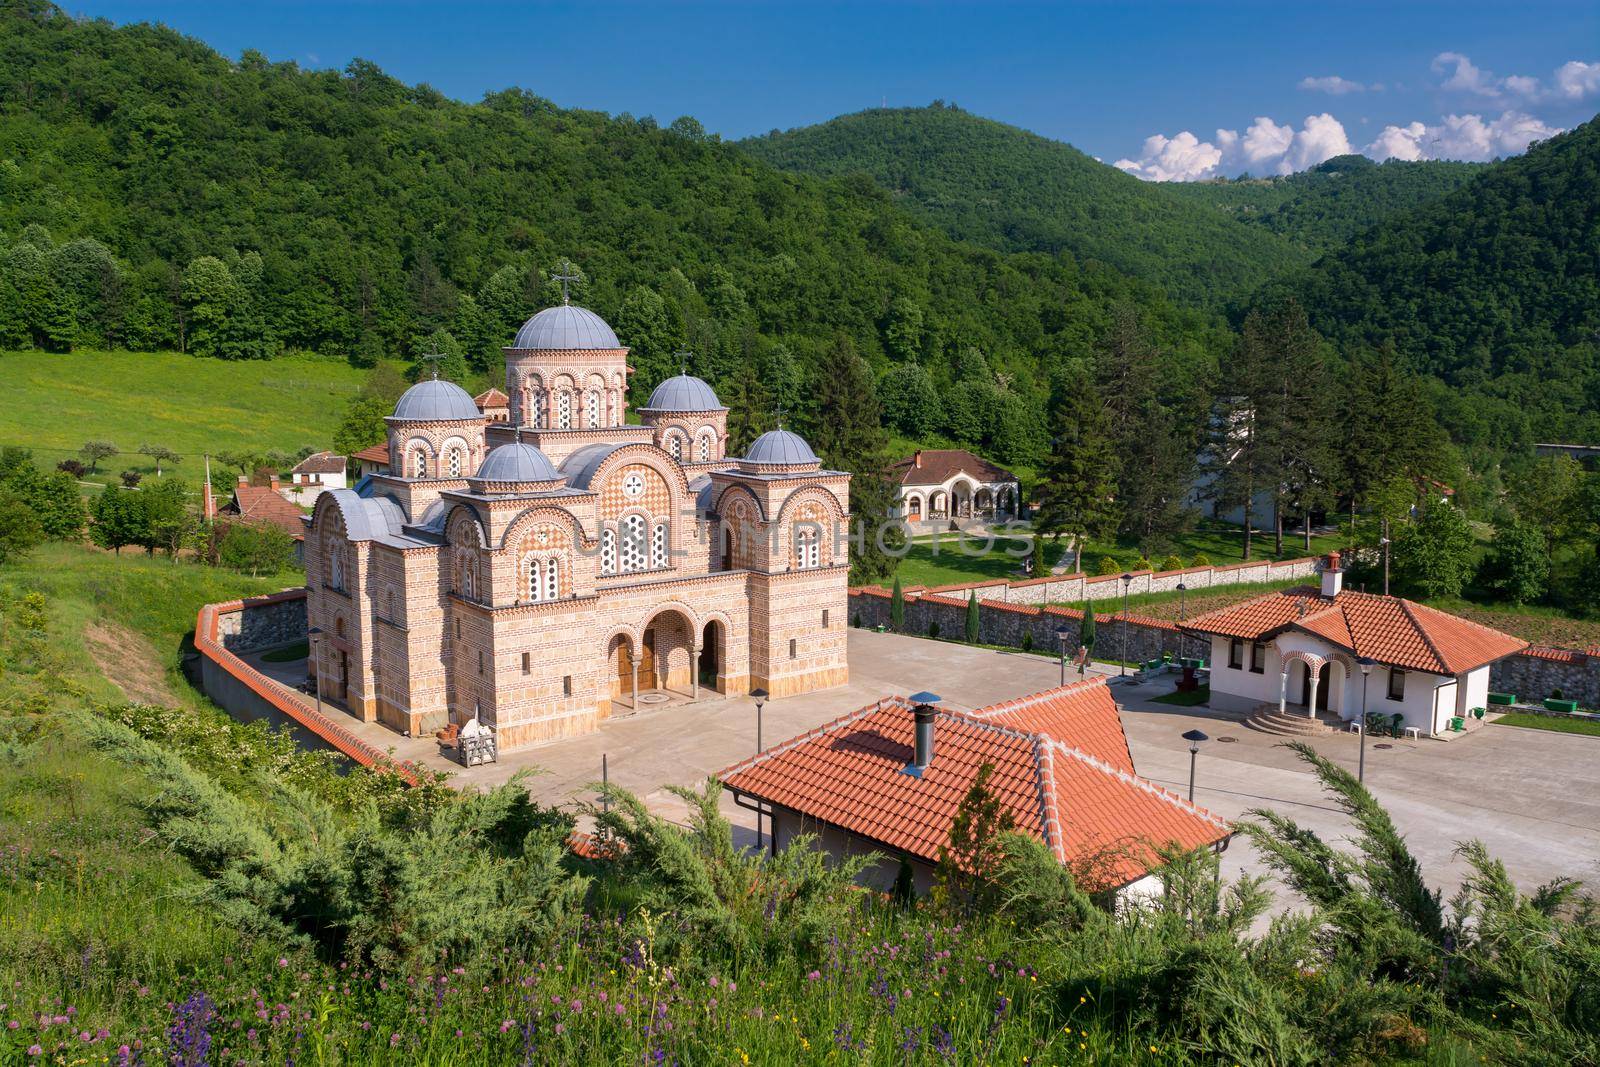 Celije - famous Orthodox monasteri near Valjevo, West Serbia, Europe